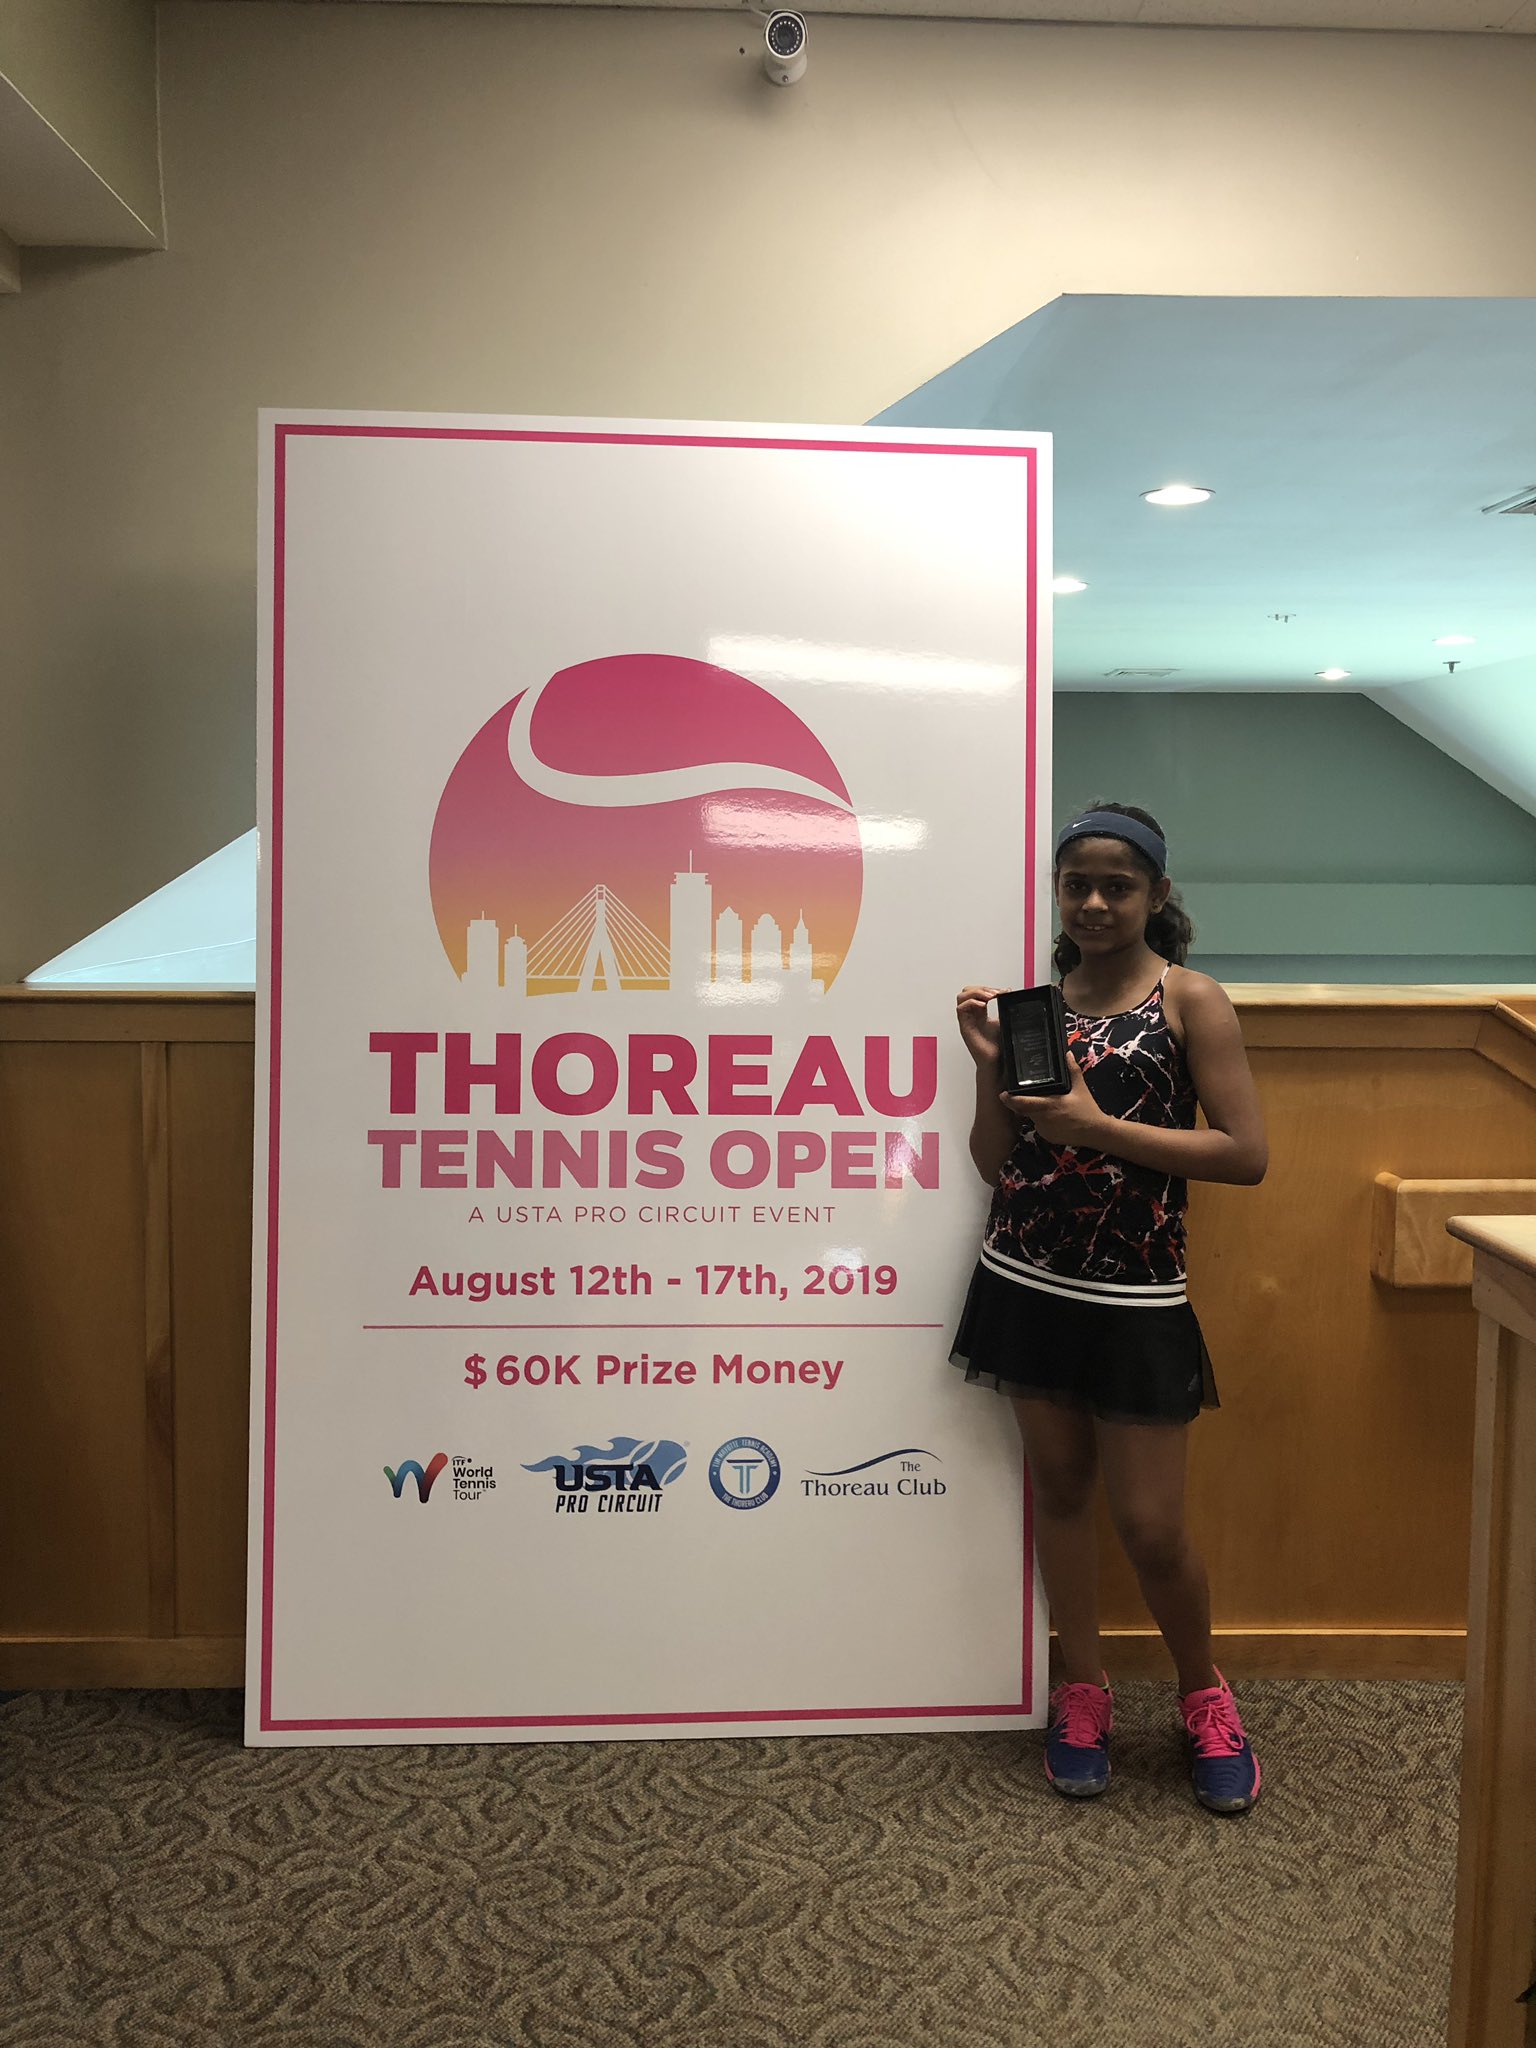 Thoreau Tennis Open (OpenThoreau) / Twitter